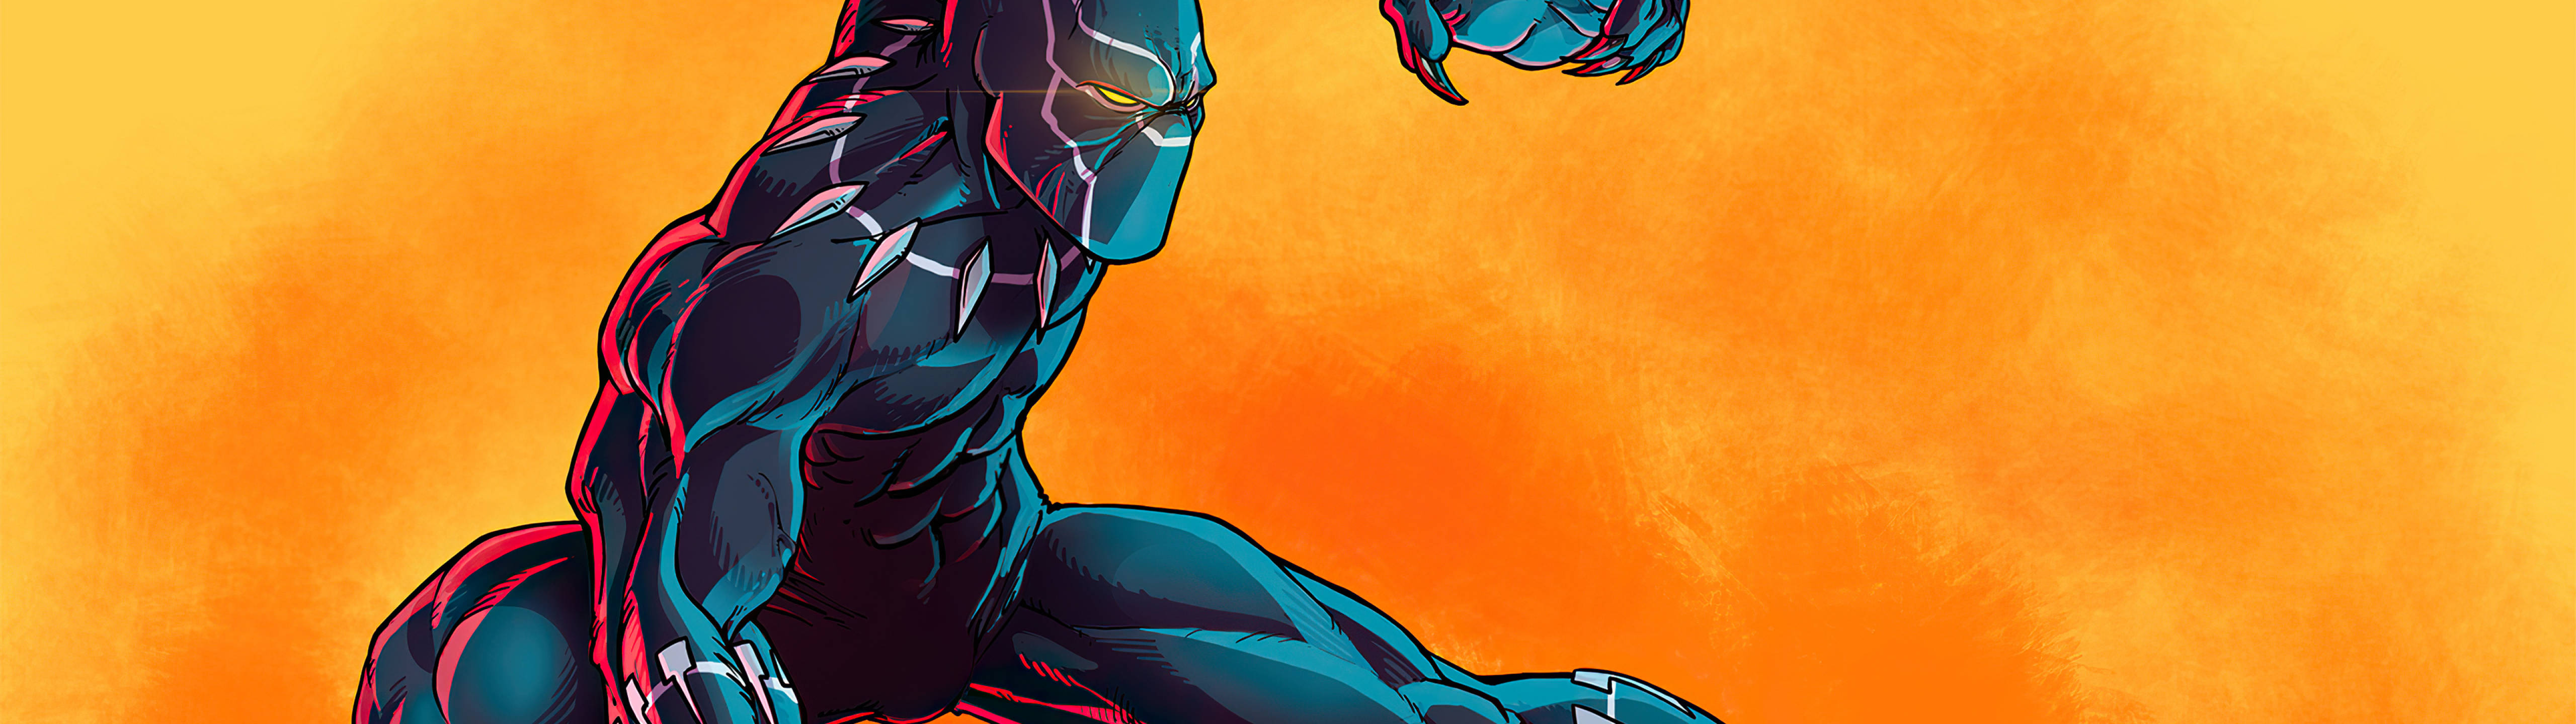 Marvel's Black Panther 5120 X 1440 Background